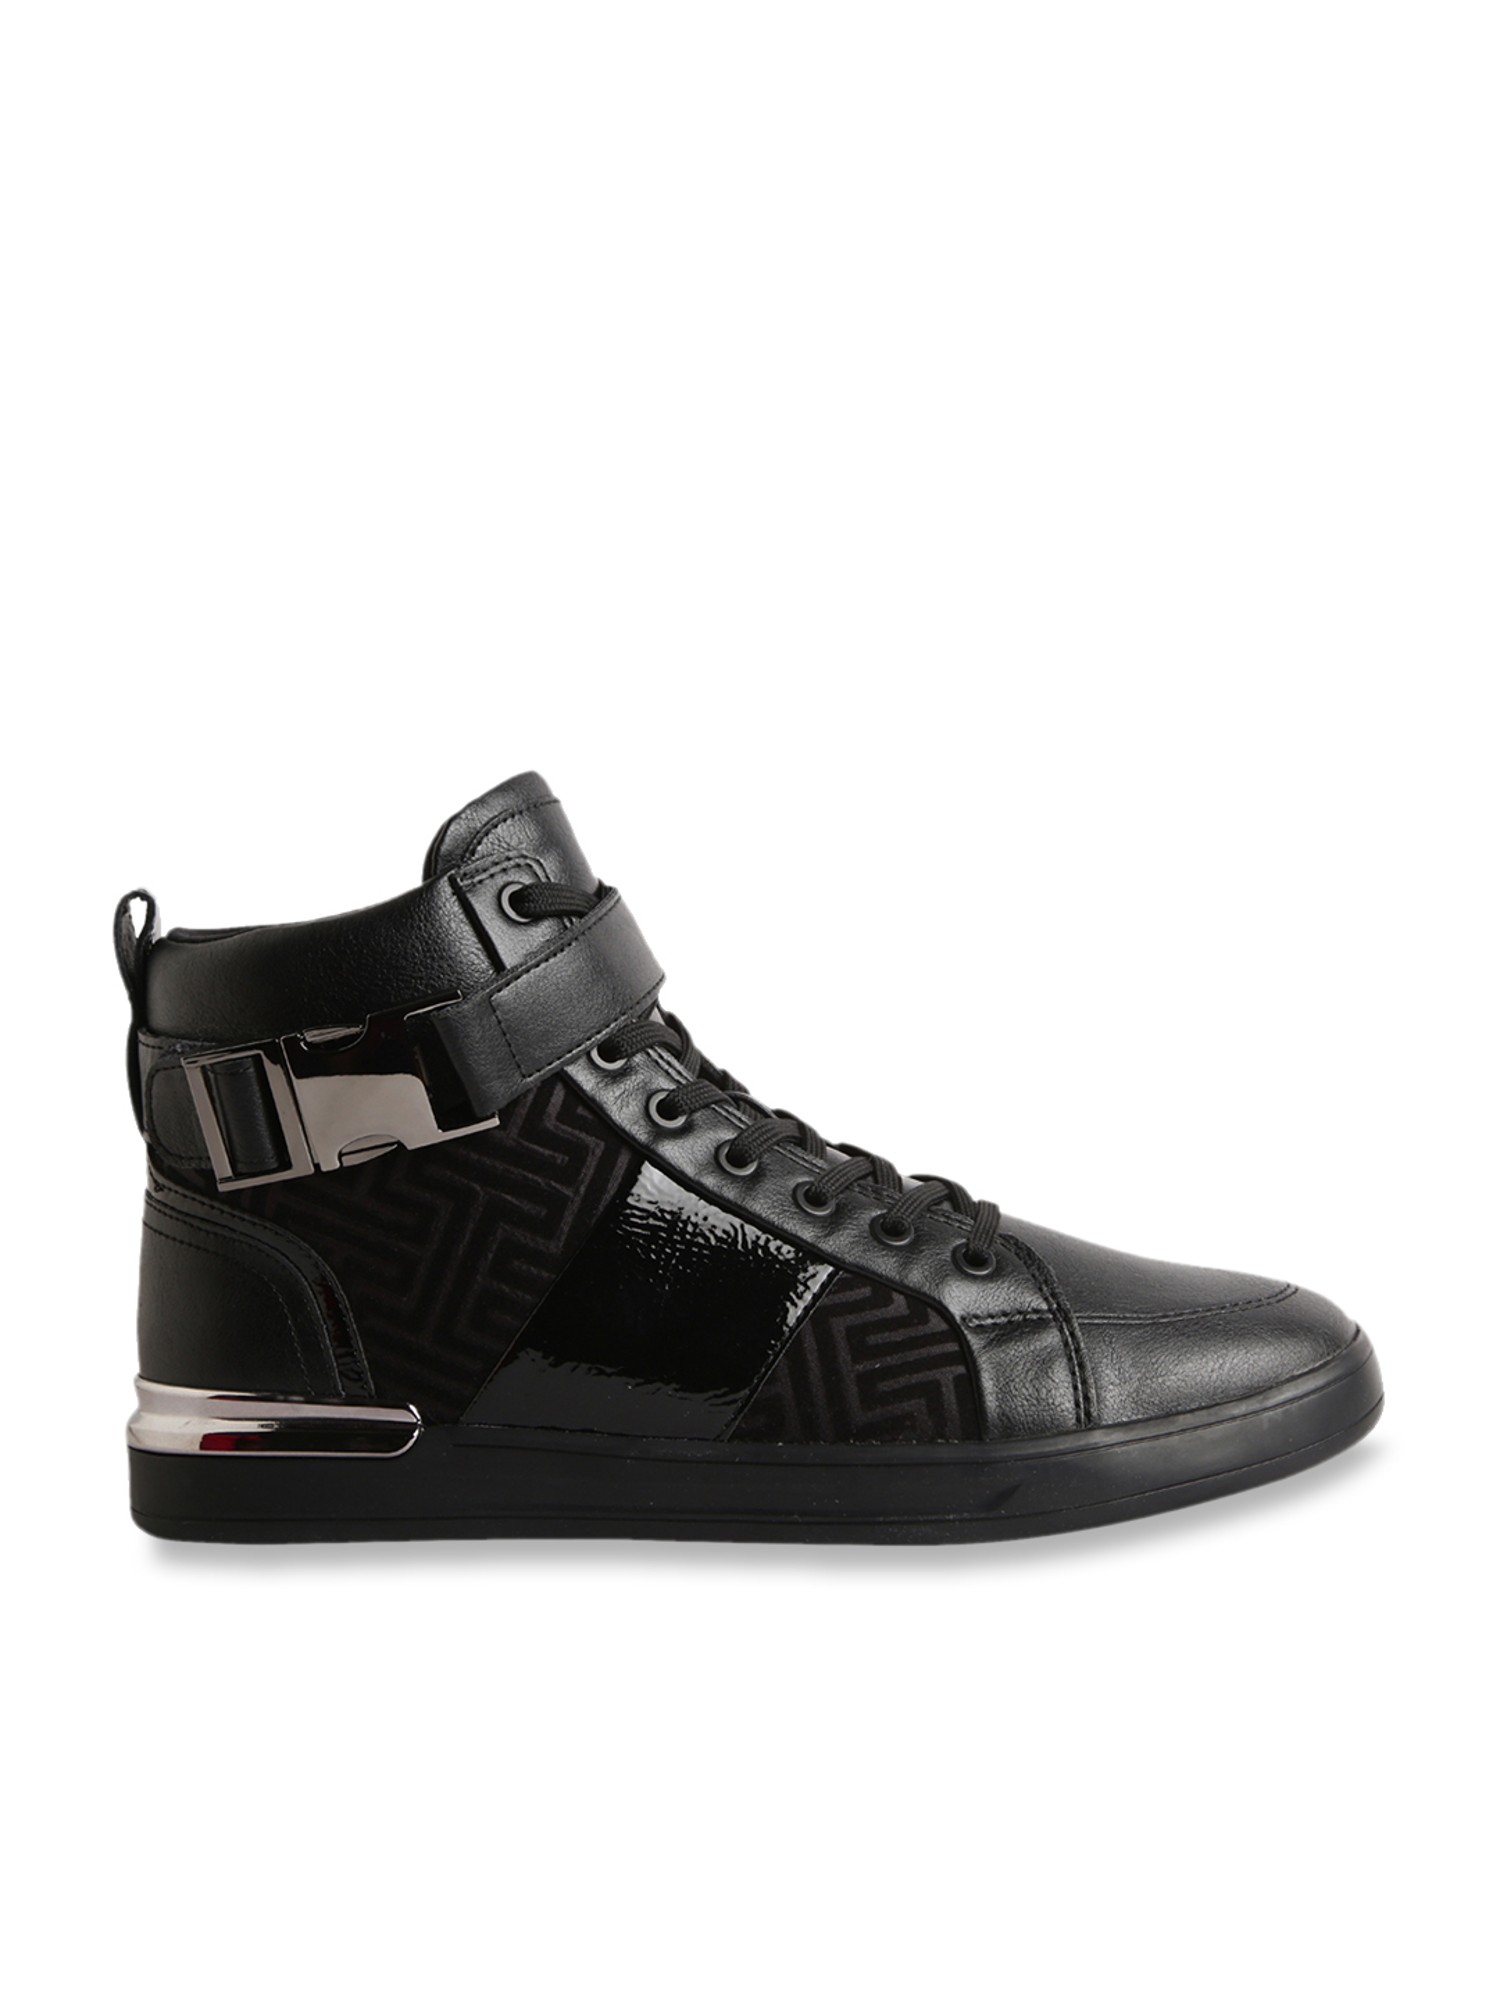 Men's ALDO Sneakers & Athletic Shoes | Nordstrom